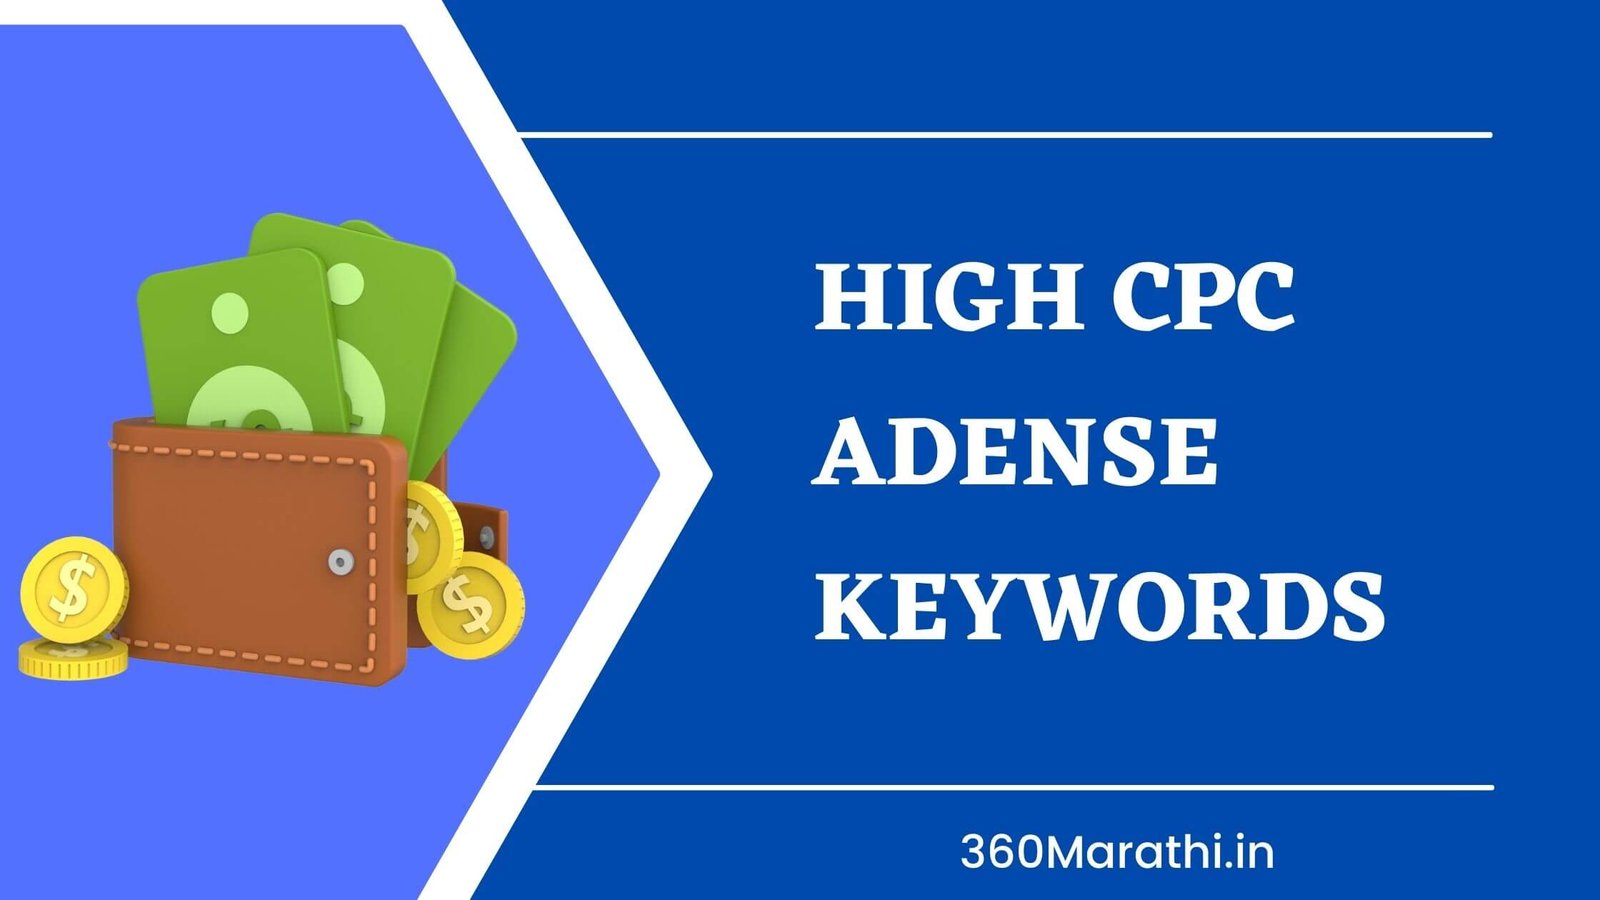 High CPC Adsense Keywords